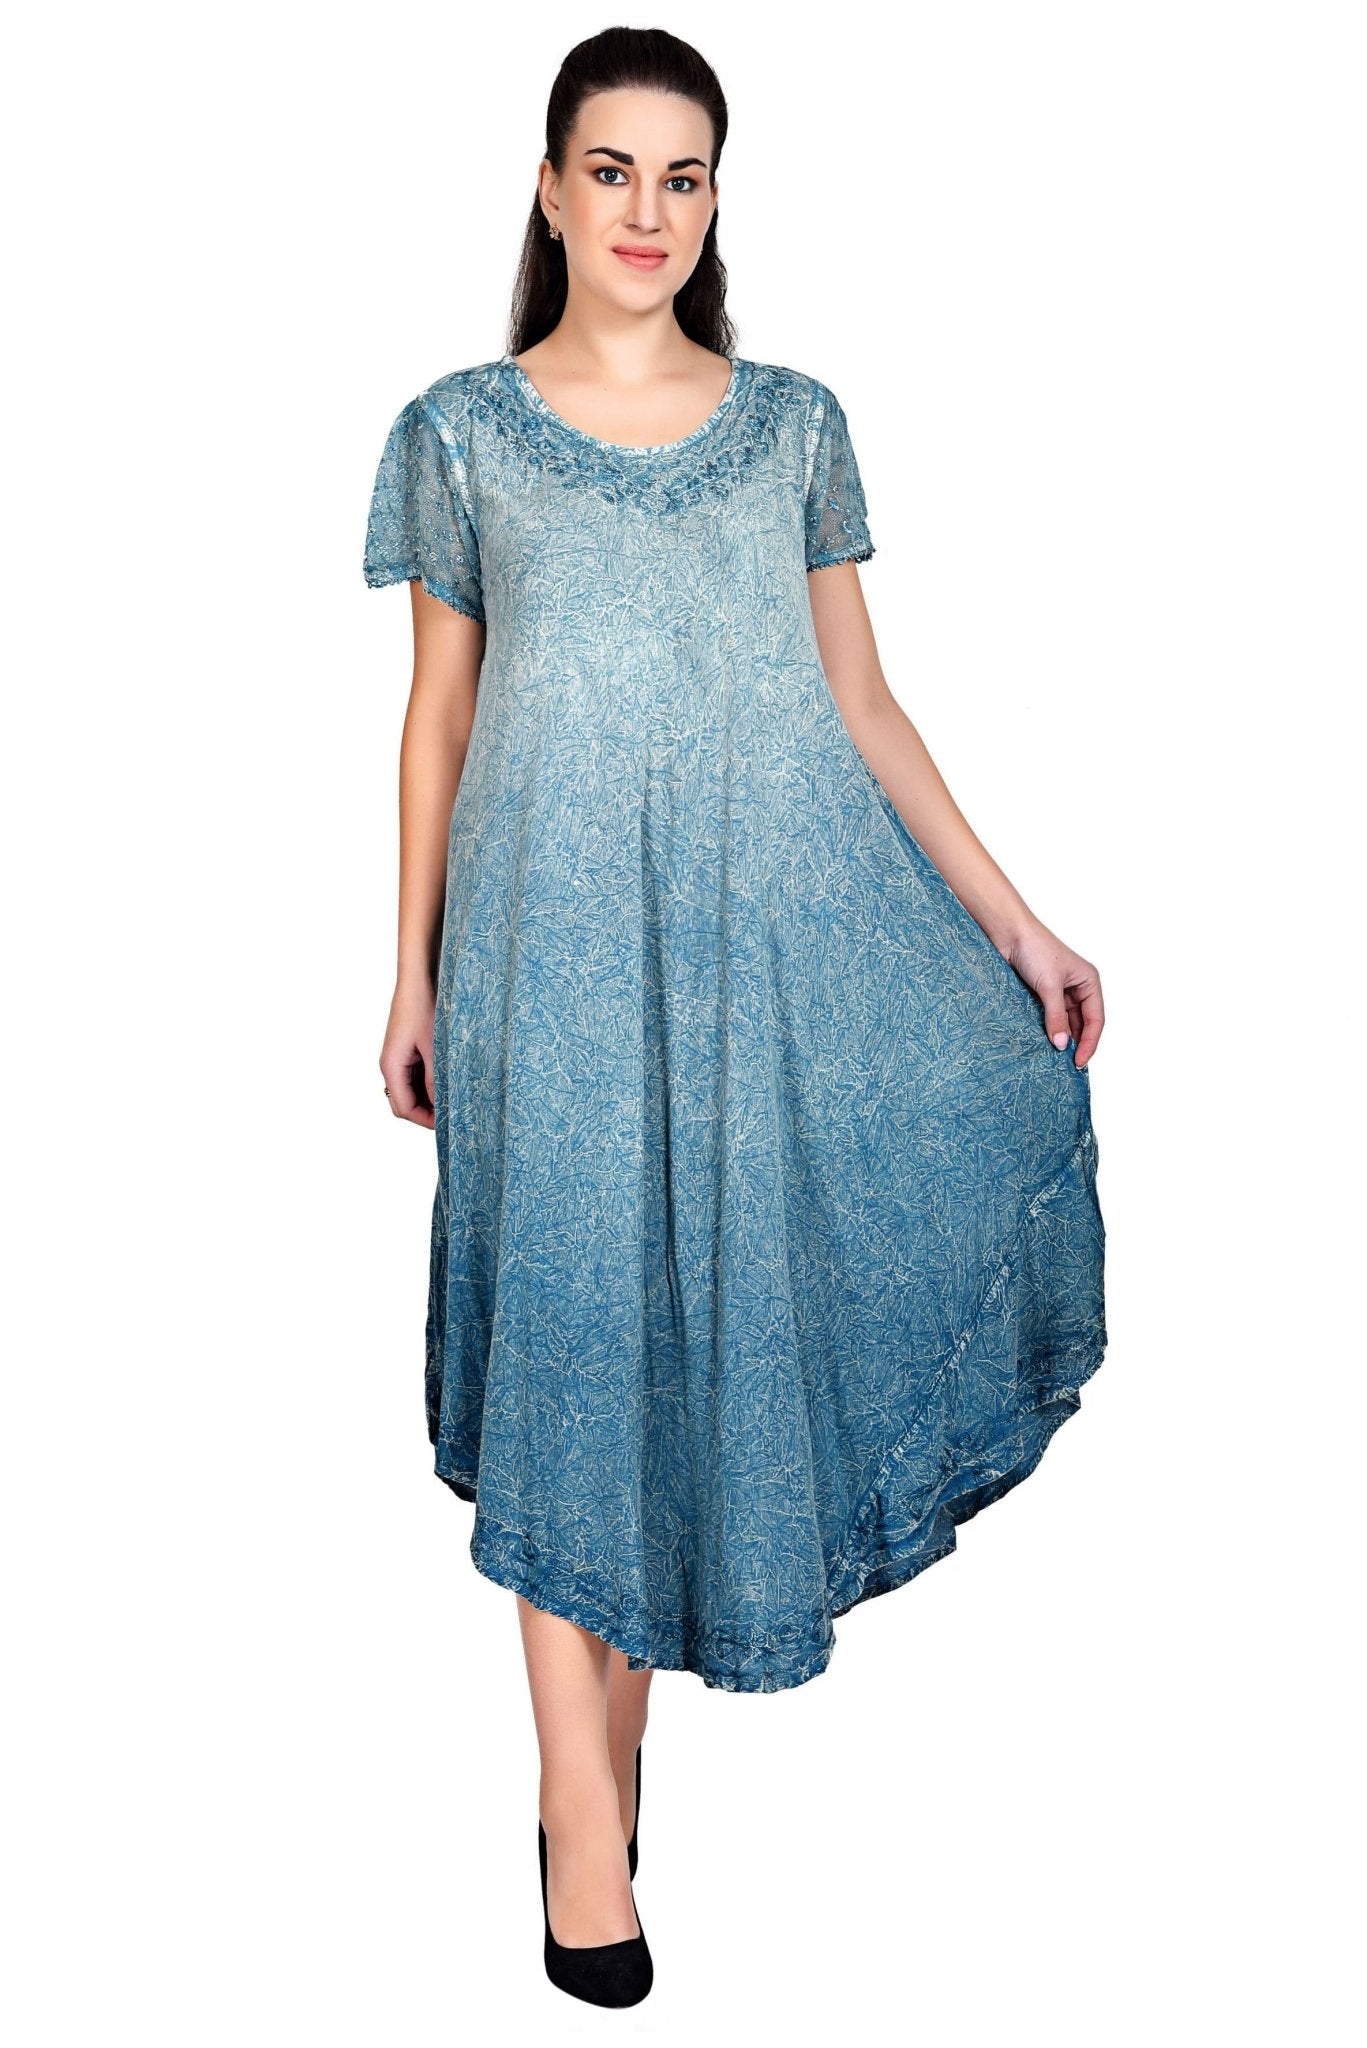 Water Color Dress 19245 - Advance Apparels Inc